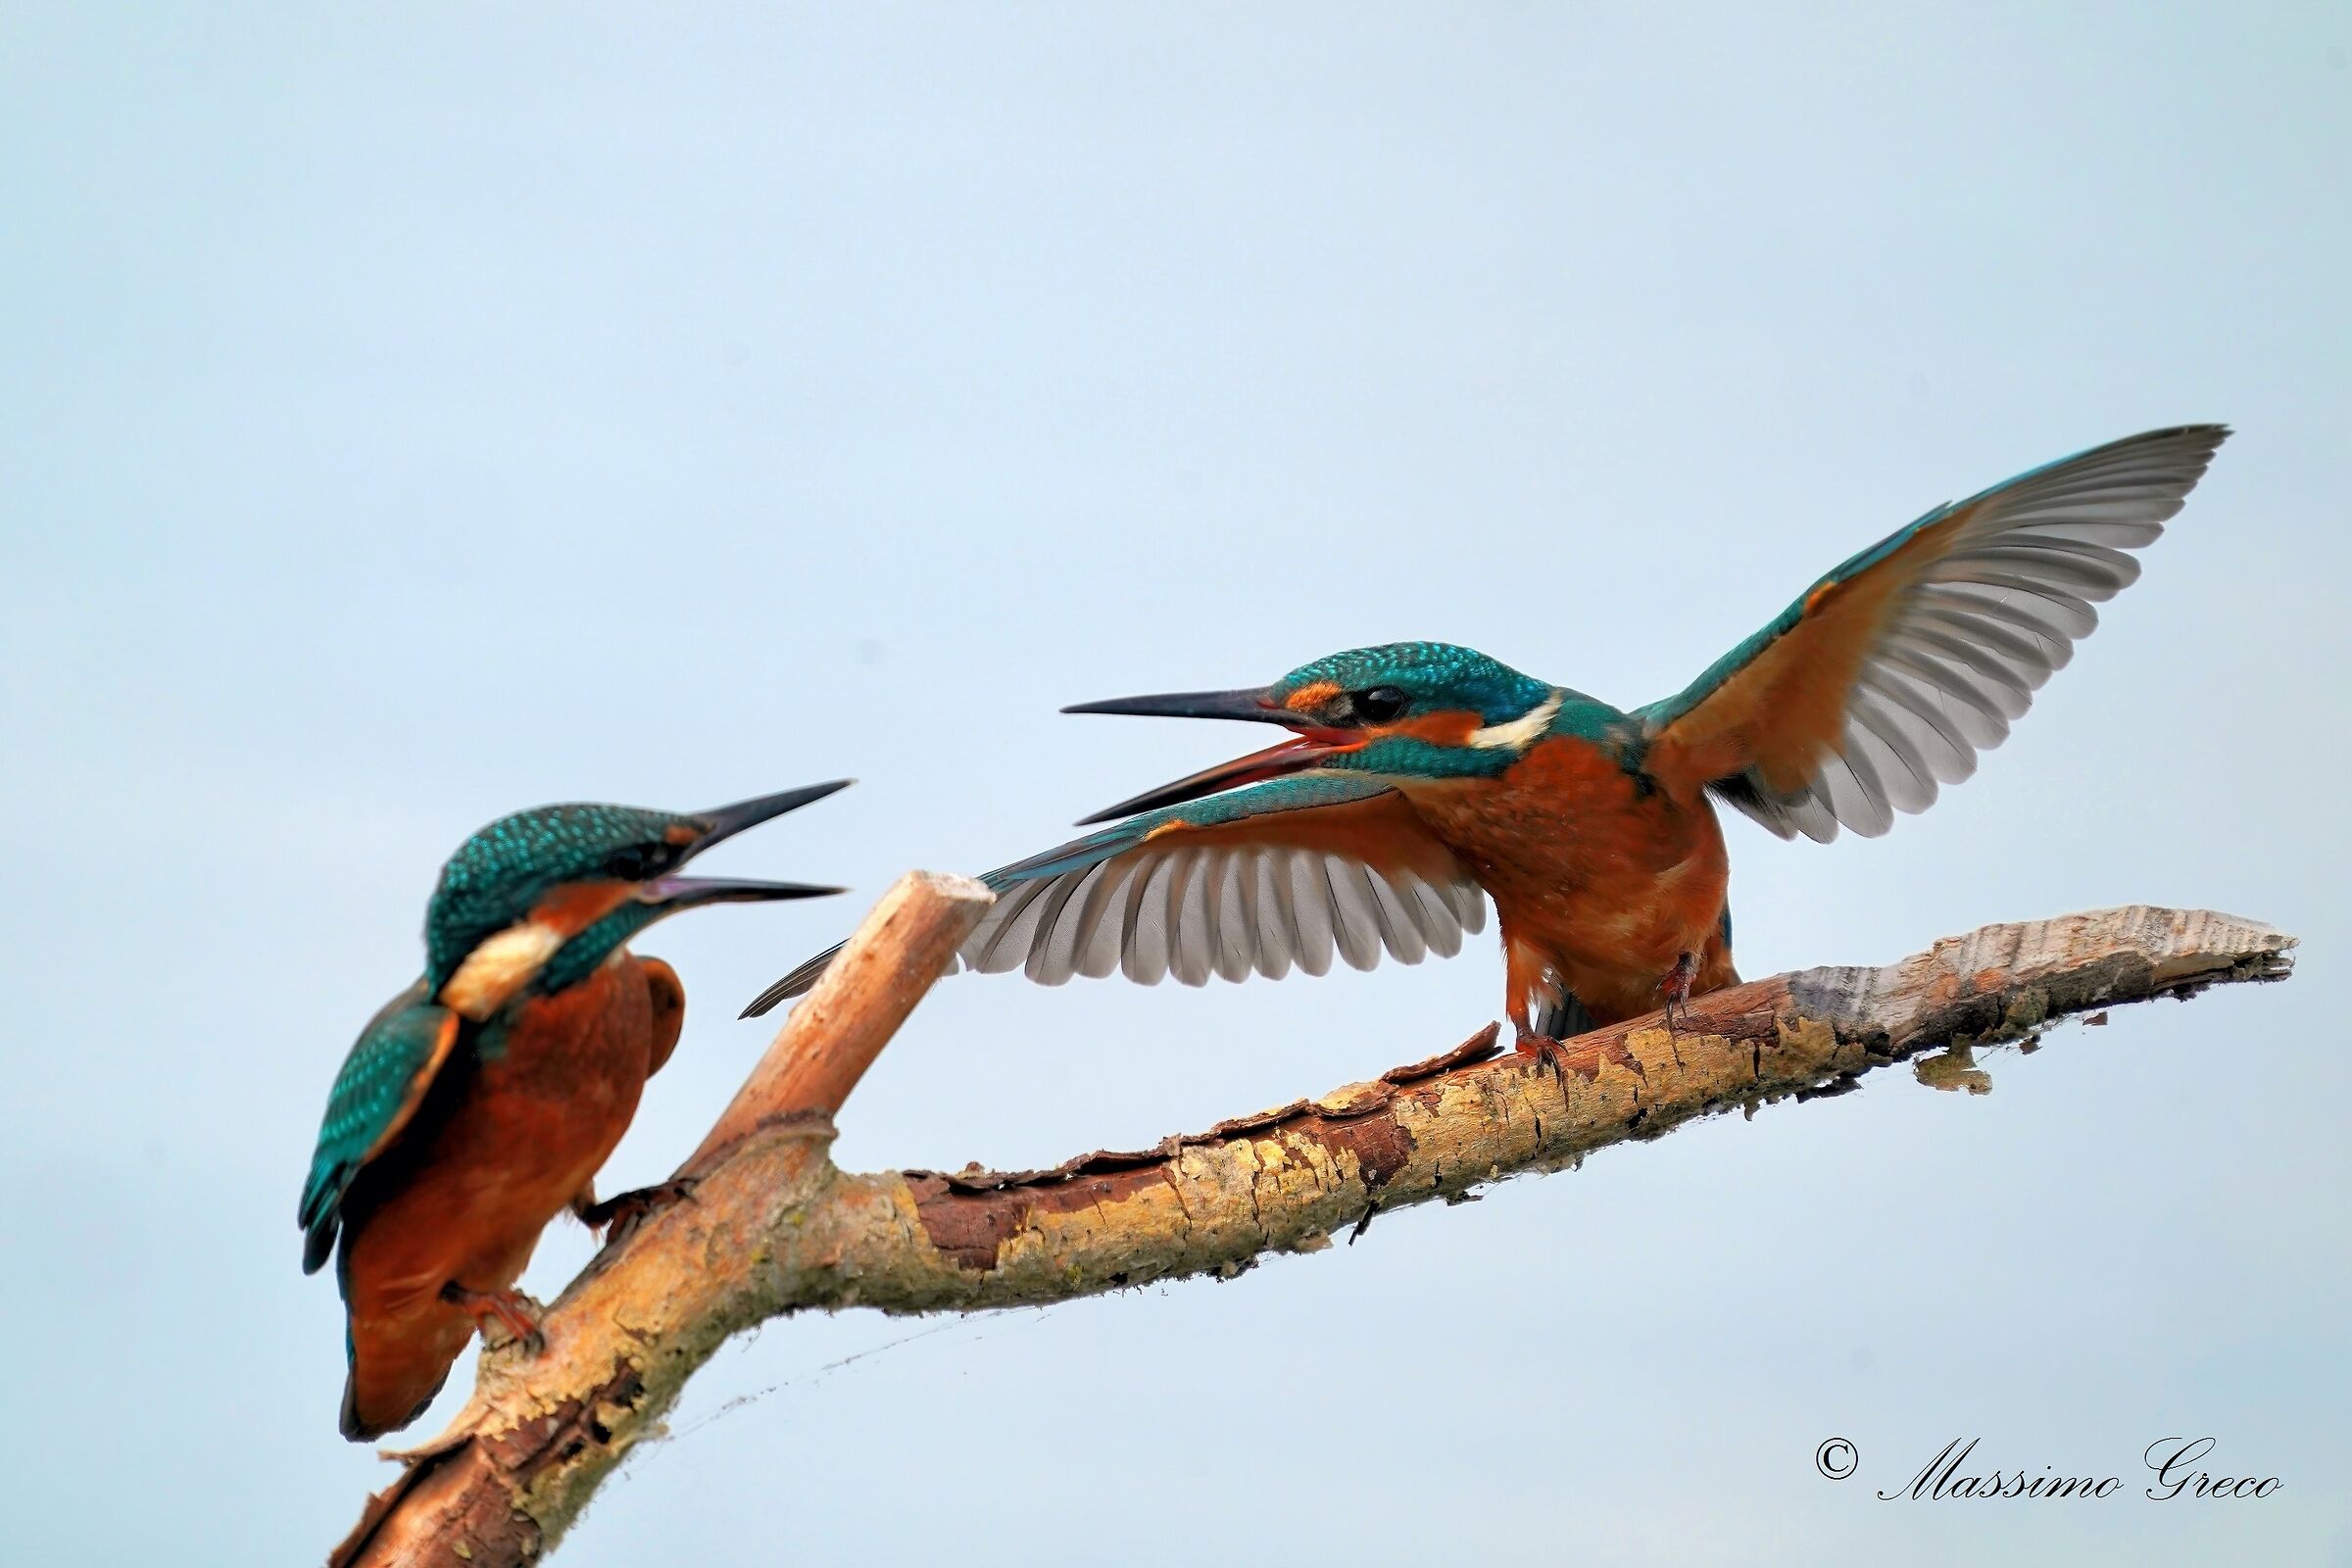 Skirmishes between Kingfishers...